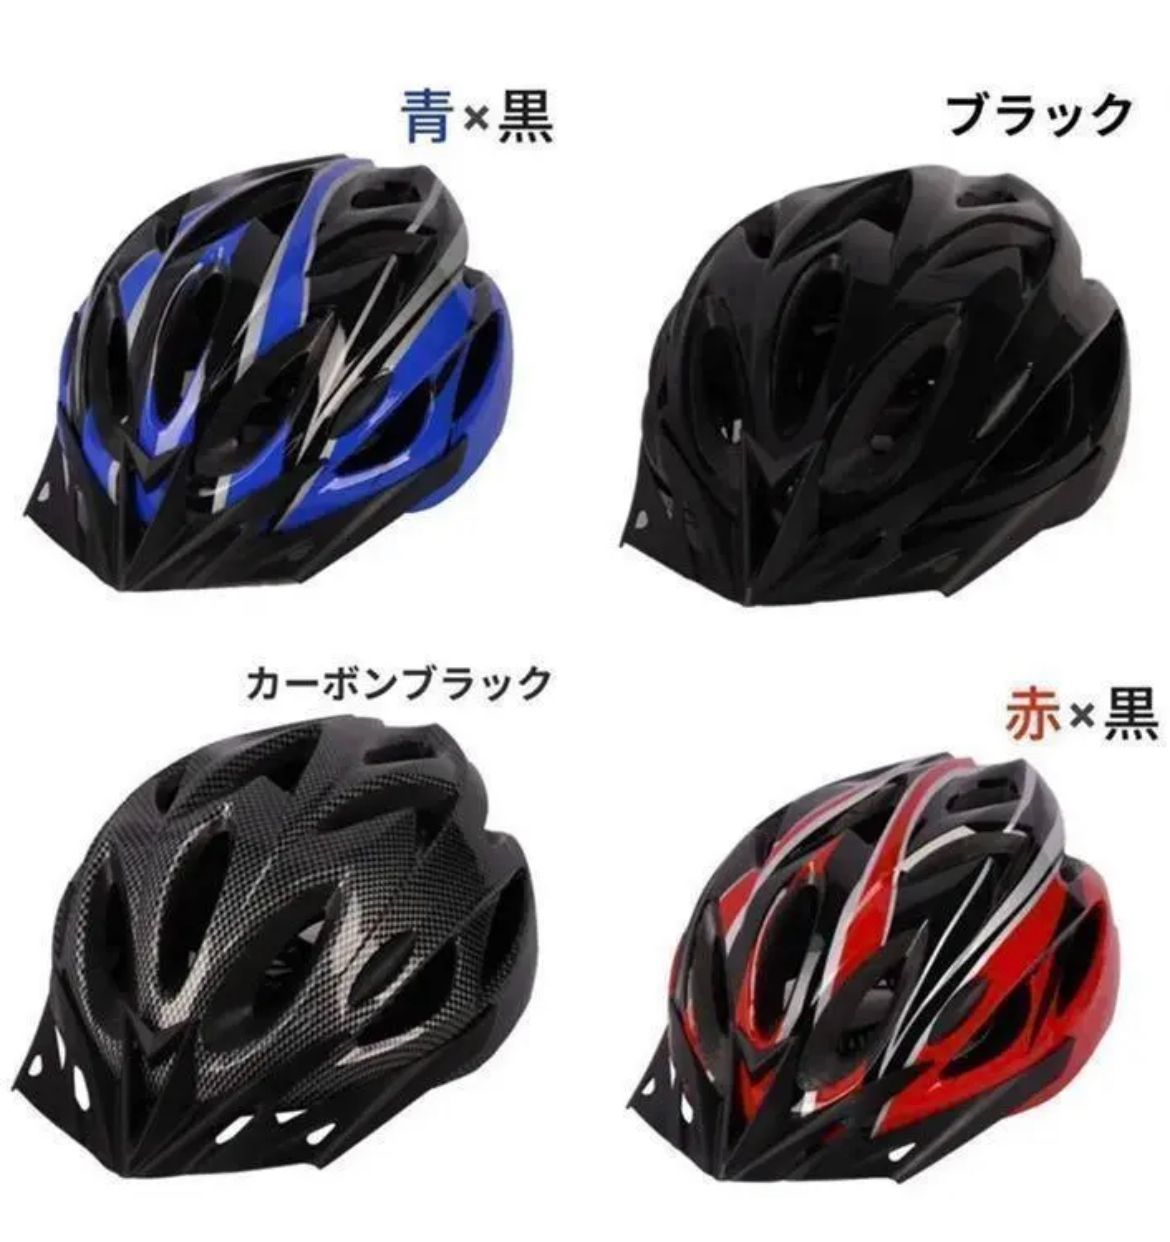 Seasonal Wrap入荷 自転車用ヘルメット 赤×黒 子供 大人 サイクリング